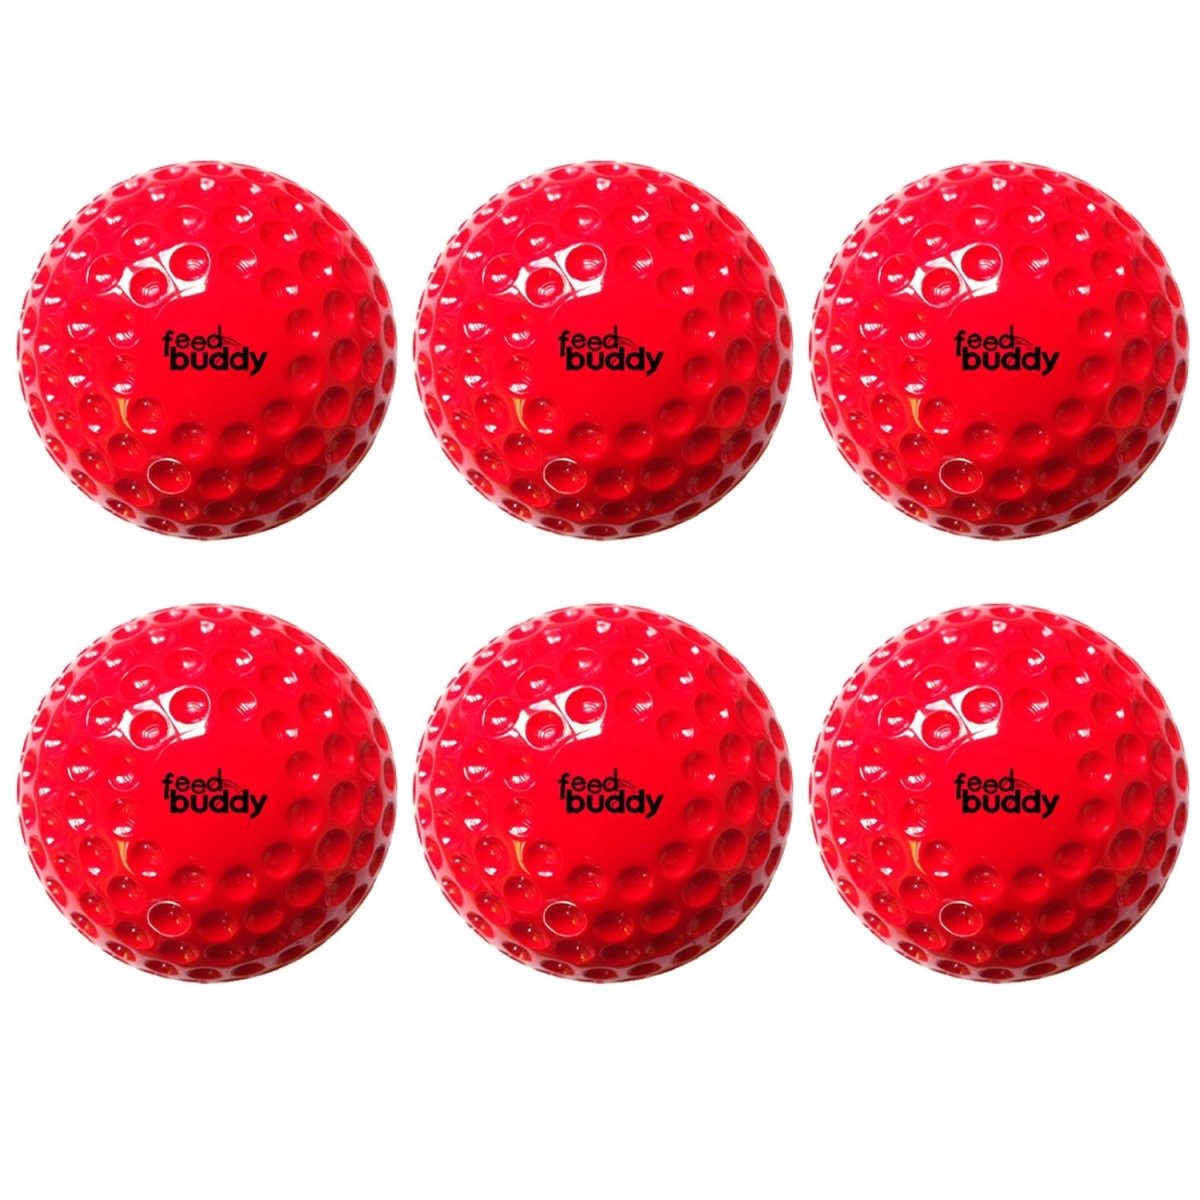 Speed Buddy Soft balls (Pack of 6).